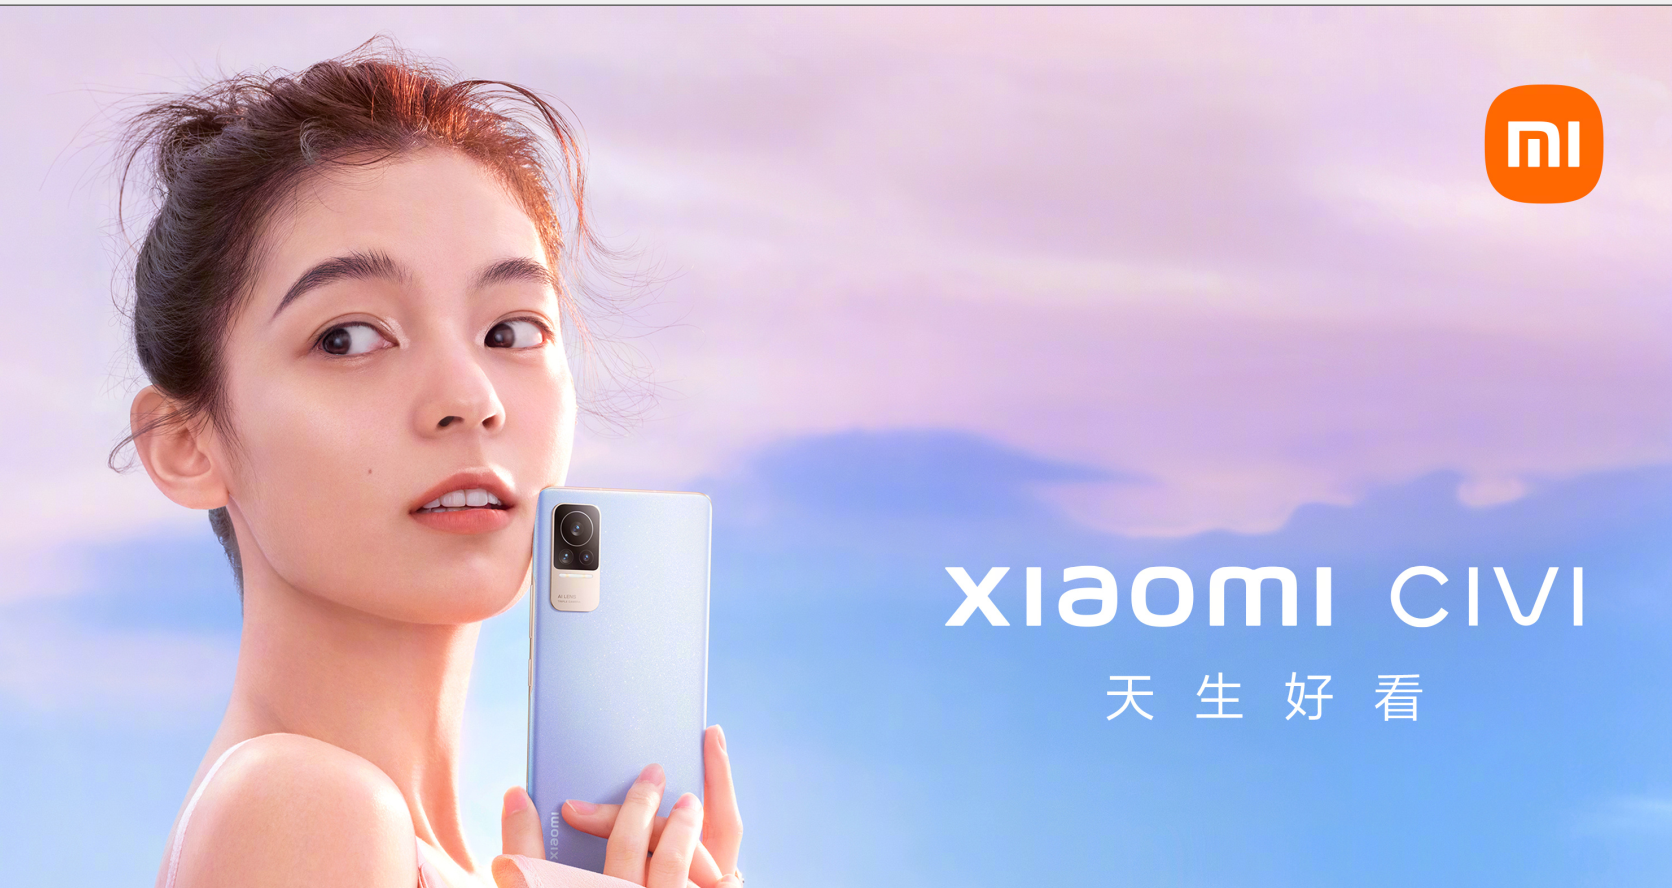 Xiaomi представила первый смартфон под брендом CIVI (Xiaomi CIVI)